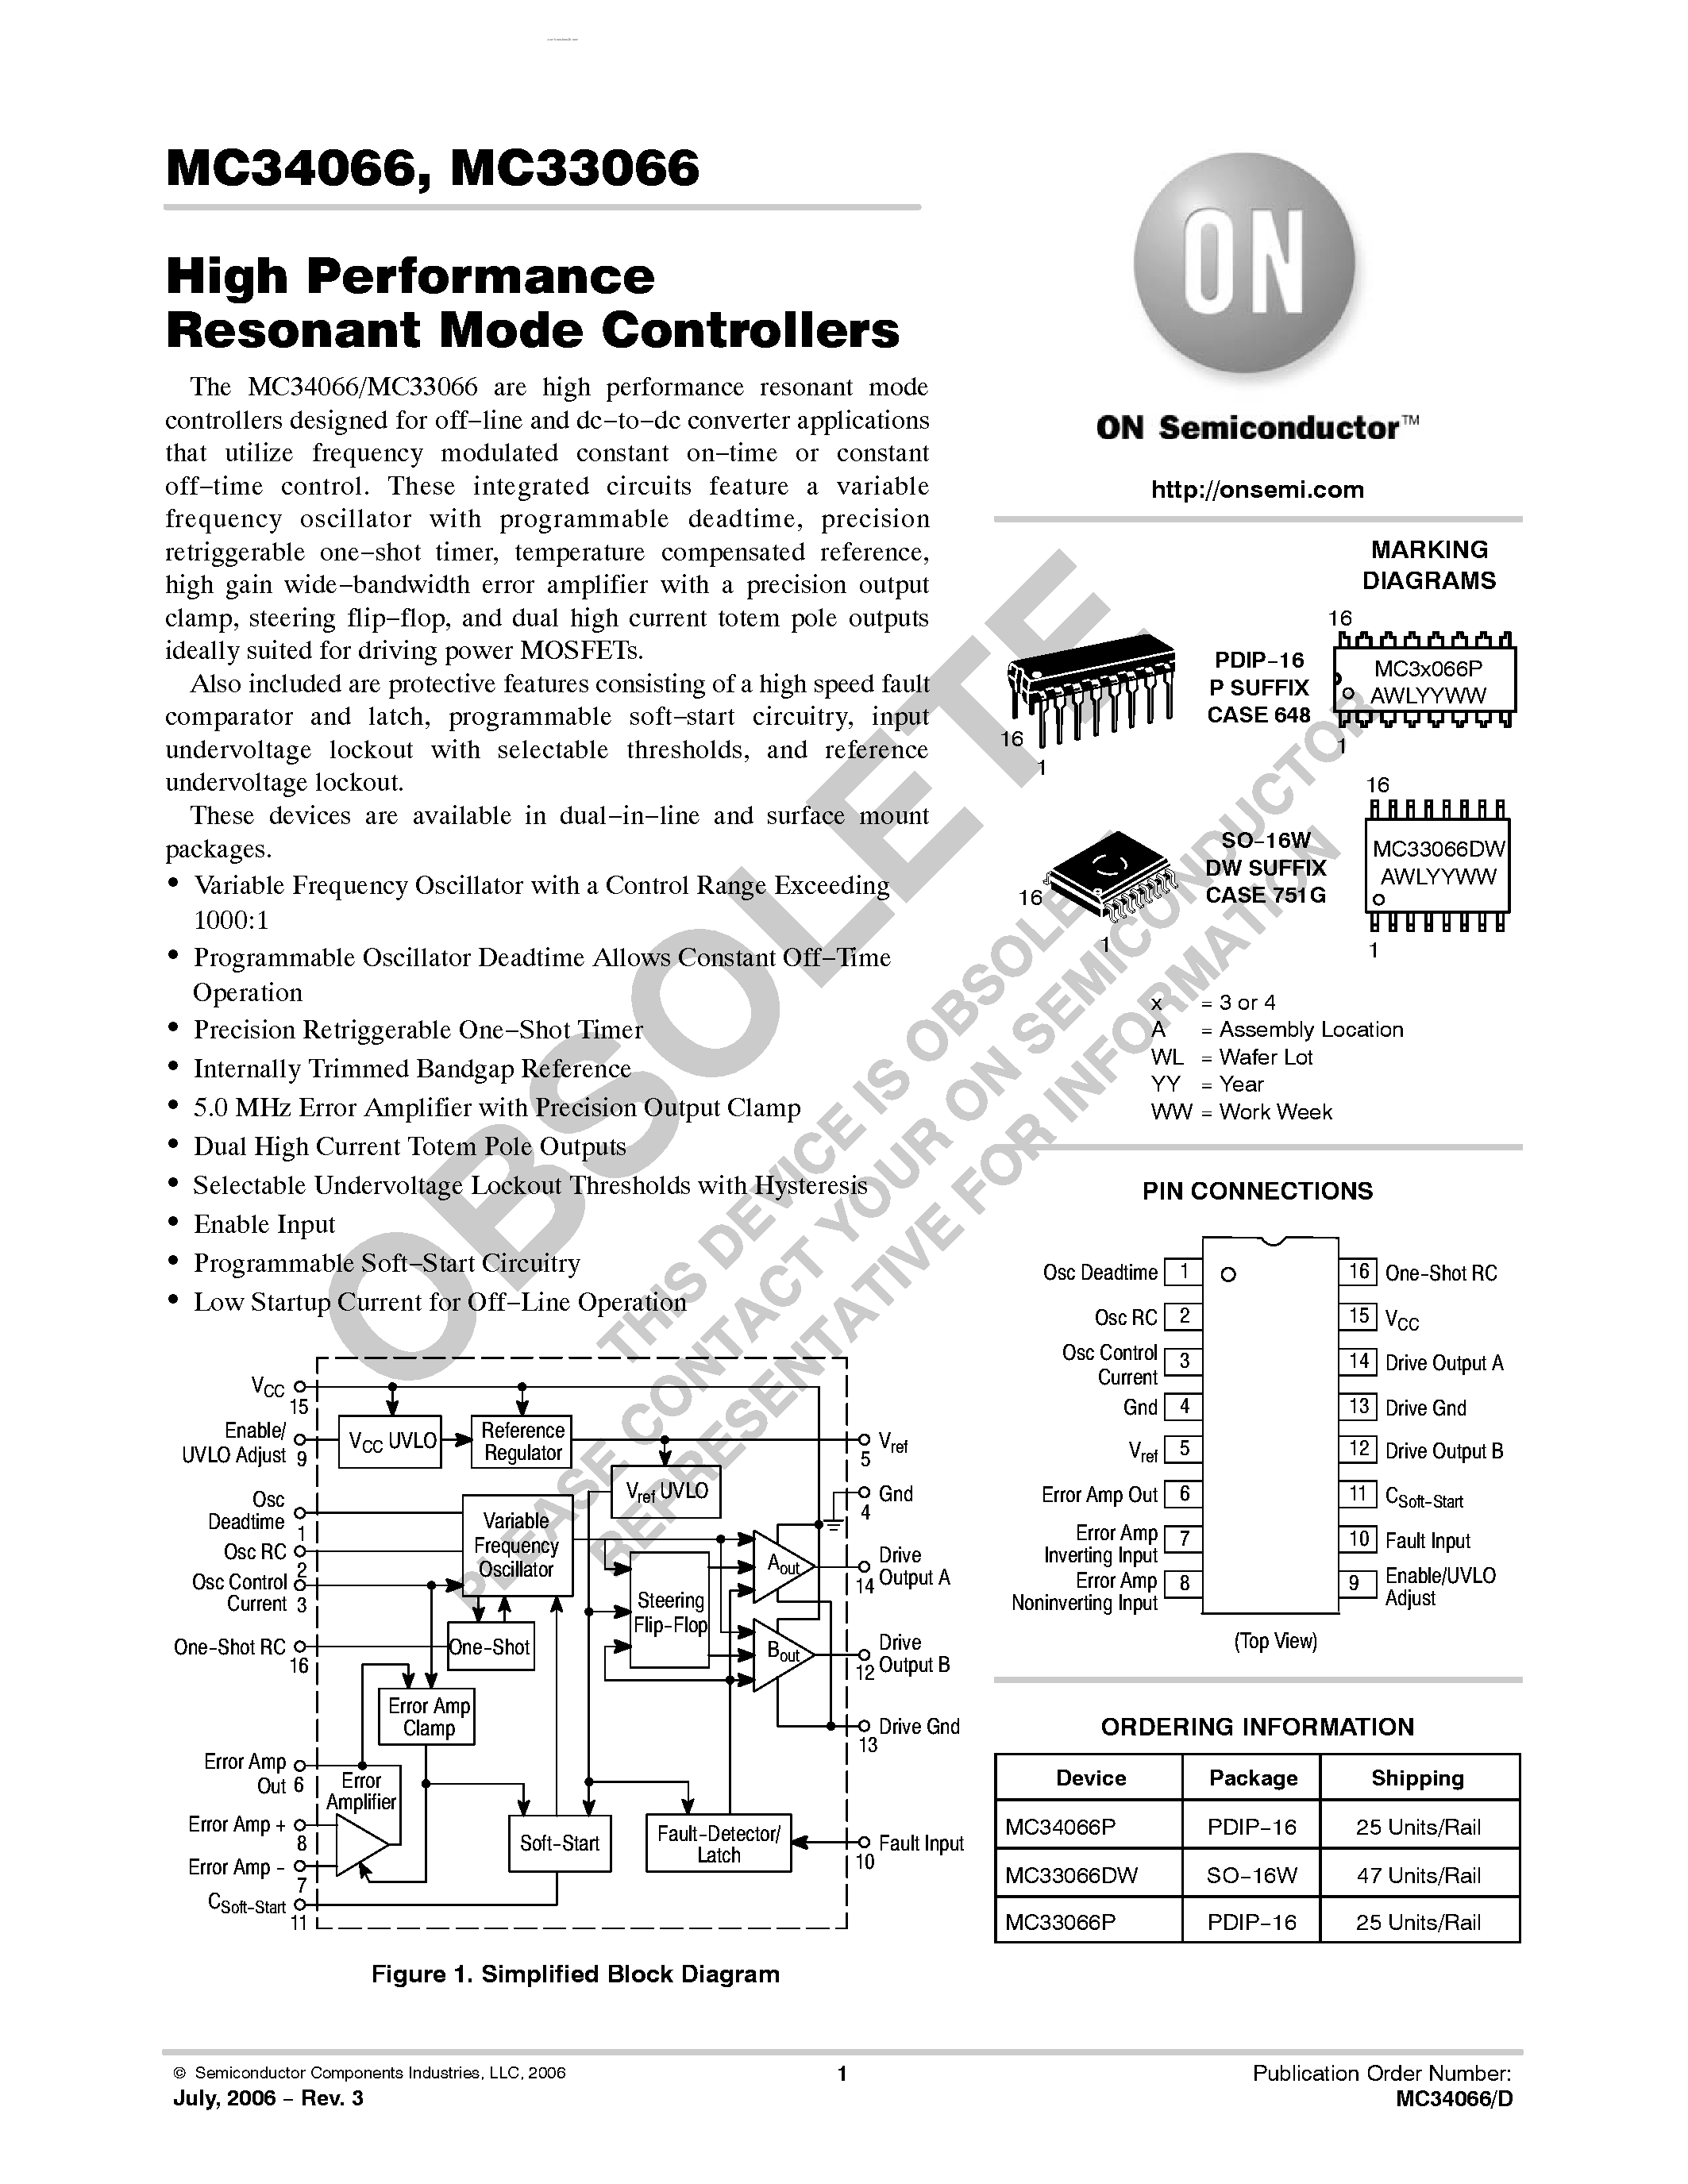 Даташит MC33066 - (MC33066 / MC34066) High Performance High Performance страница 1